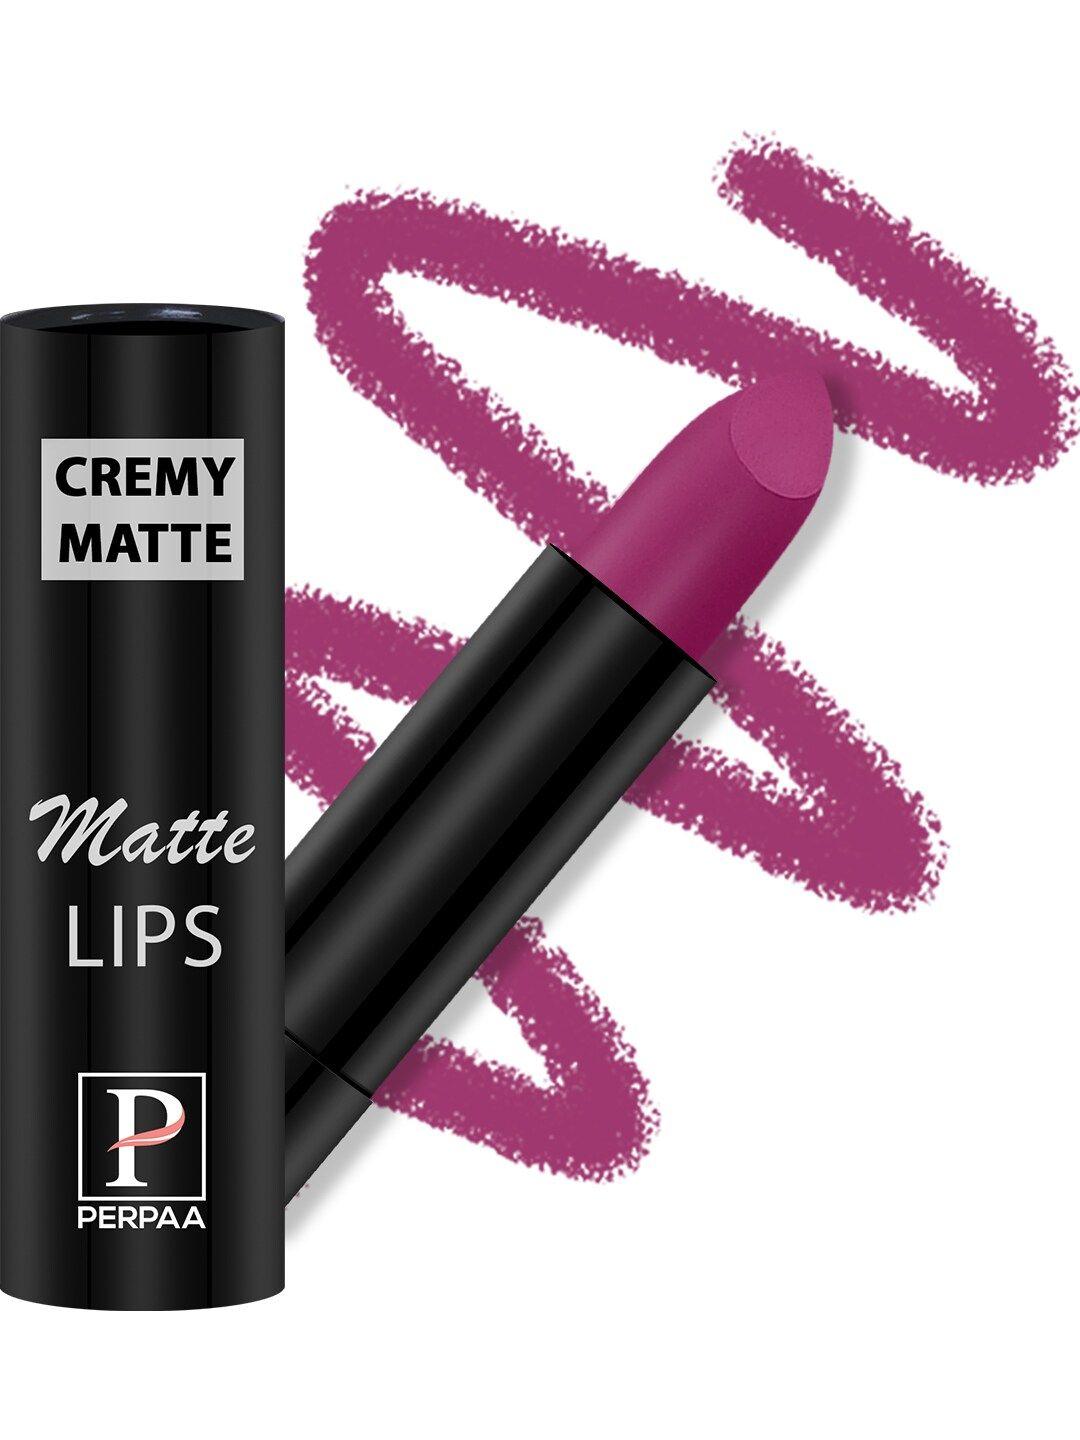 perpaa long lasting & waterproof creamy matte lipstick with vitamin e - rose magenta 58